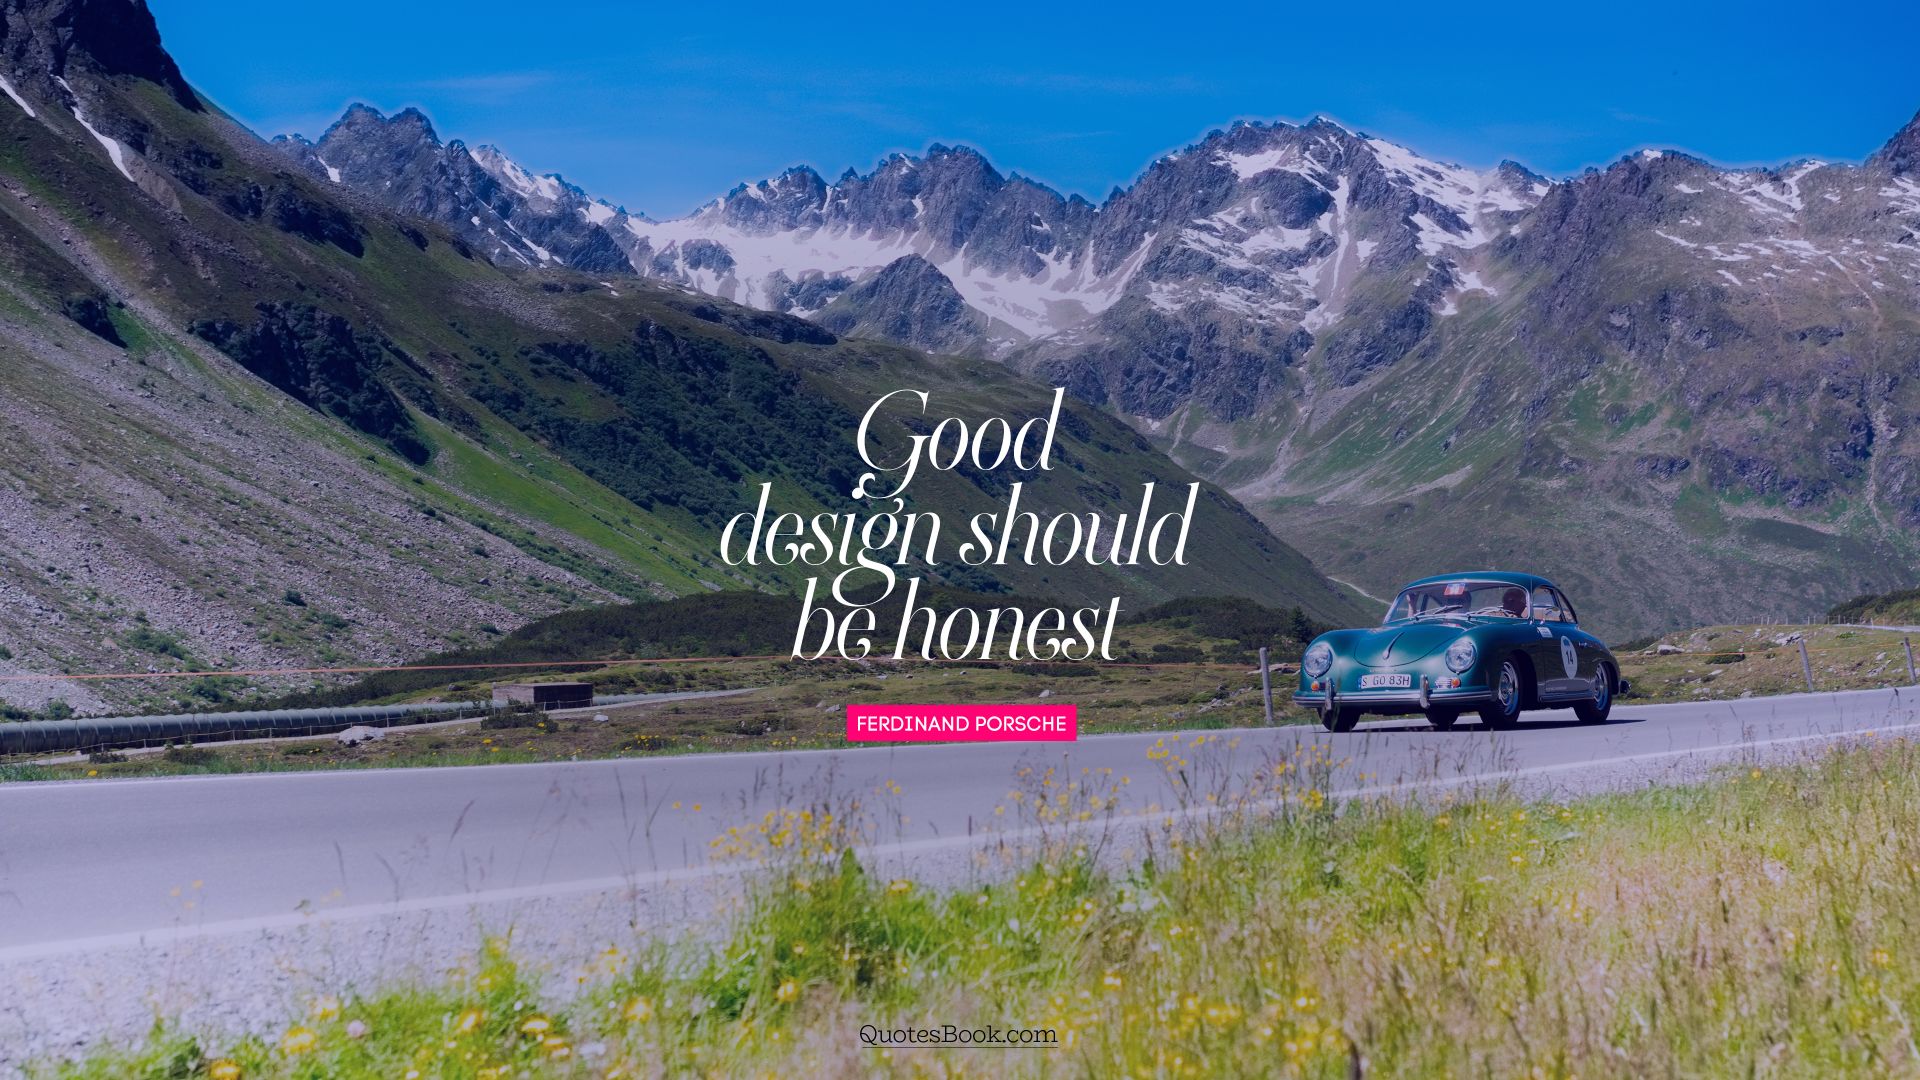 Good design should be honest. - Quote by Ferdinand Porsche